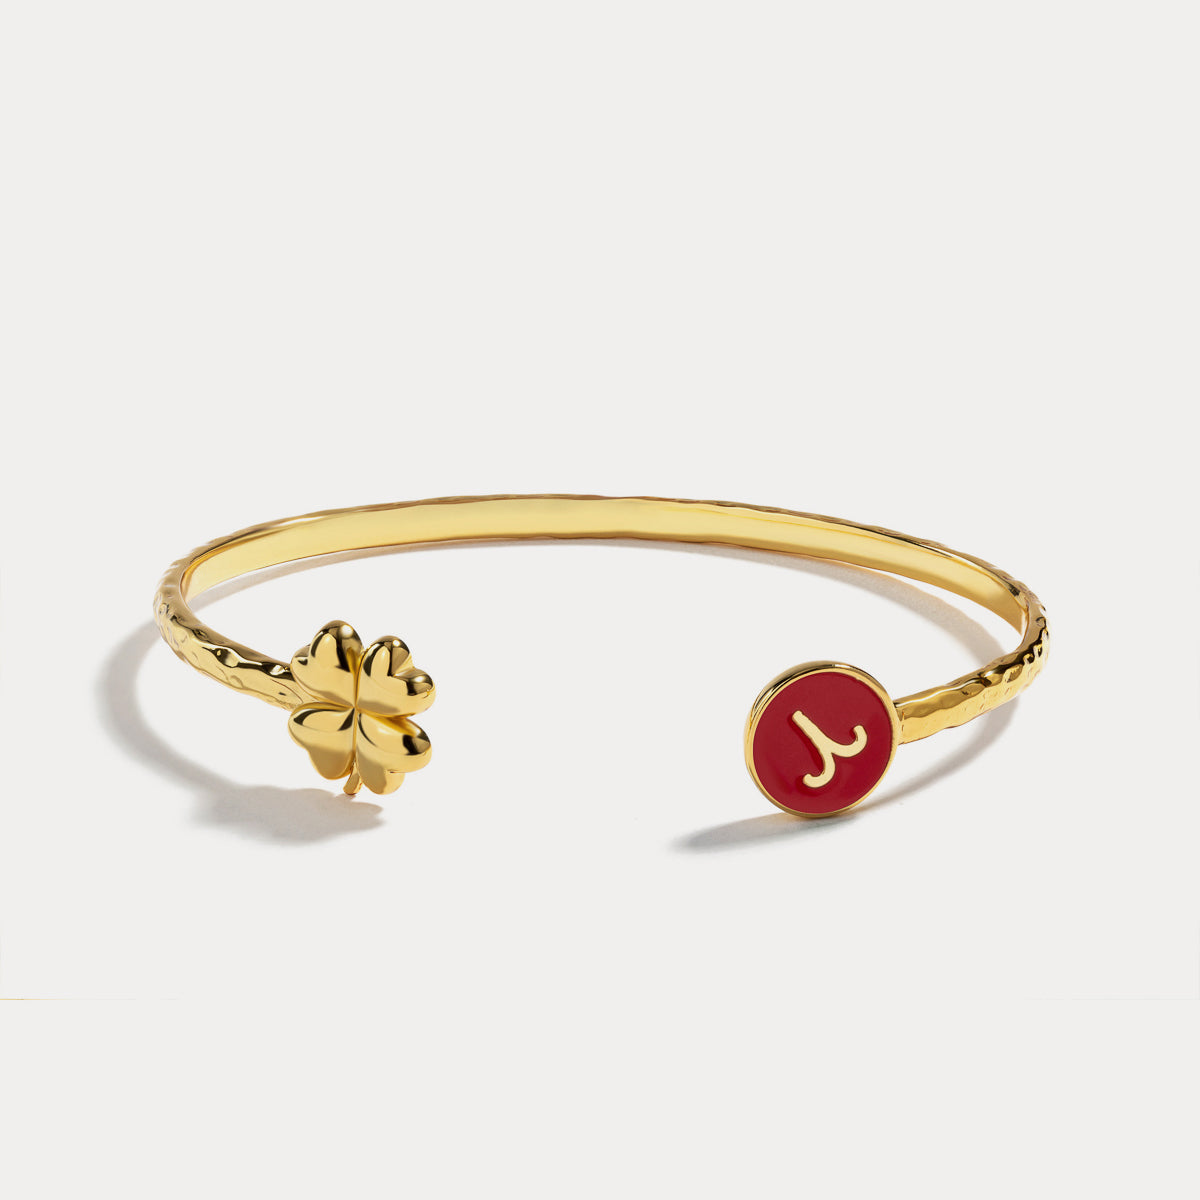 Selenichast astrological sign bracelet